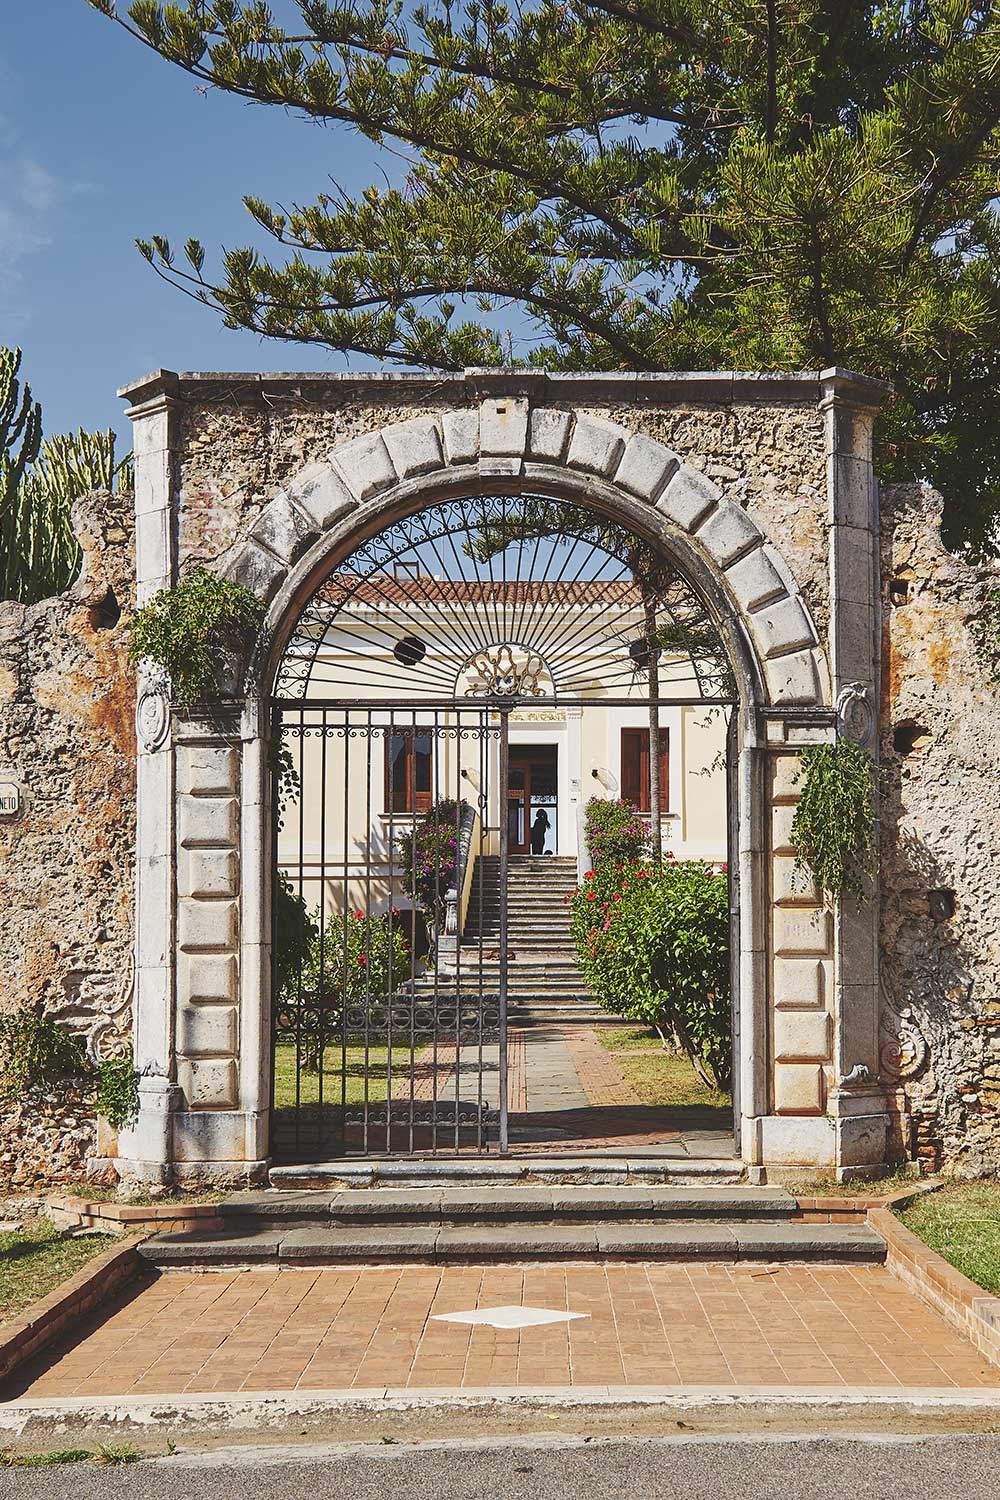 Il Ducale's entry gate